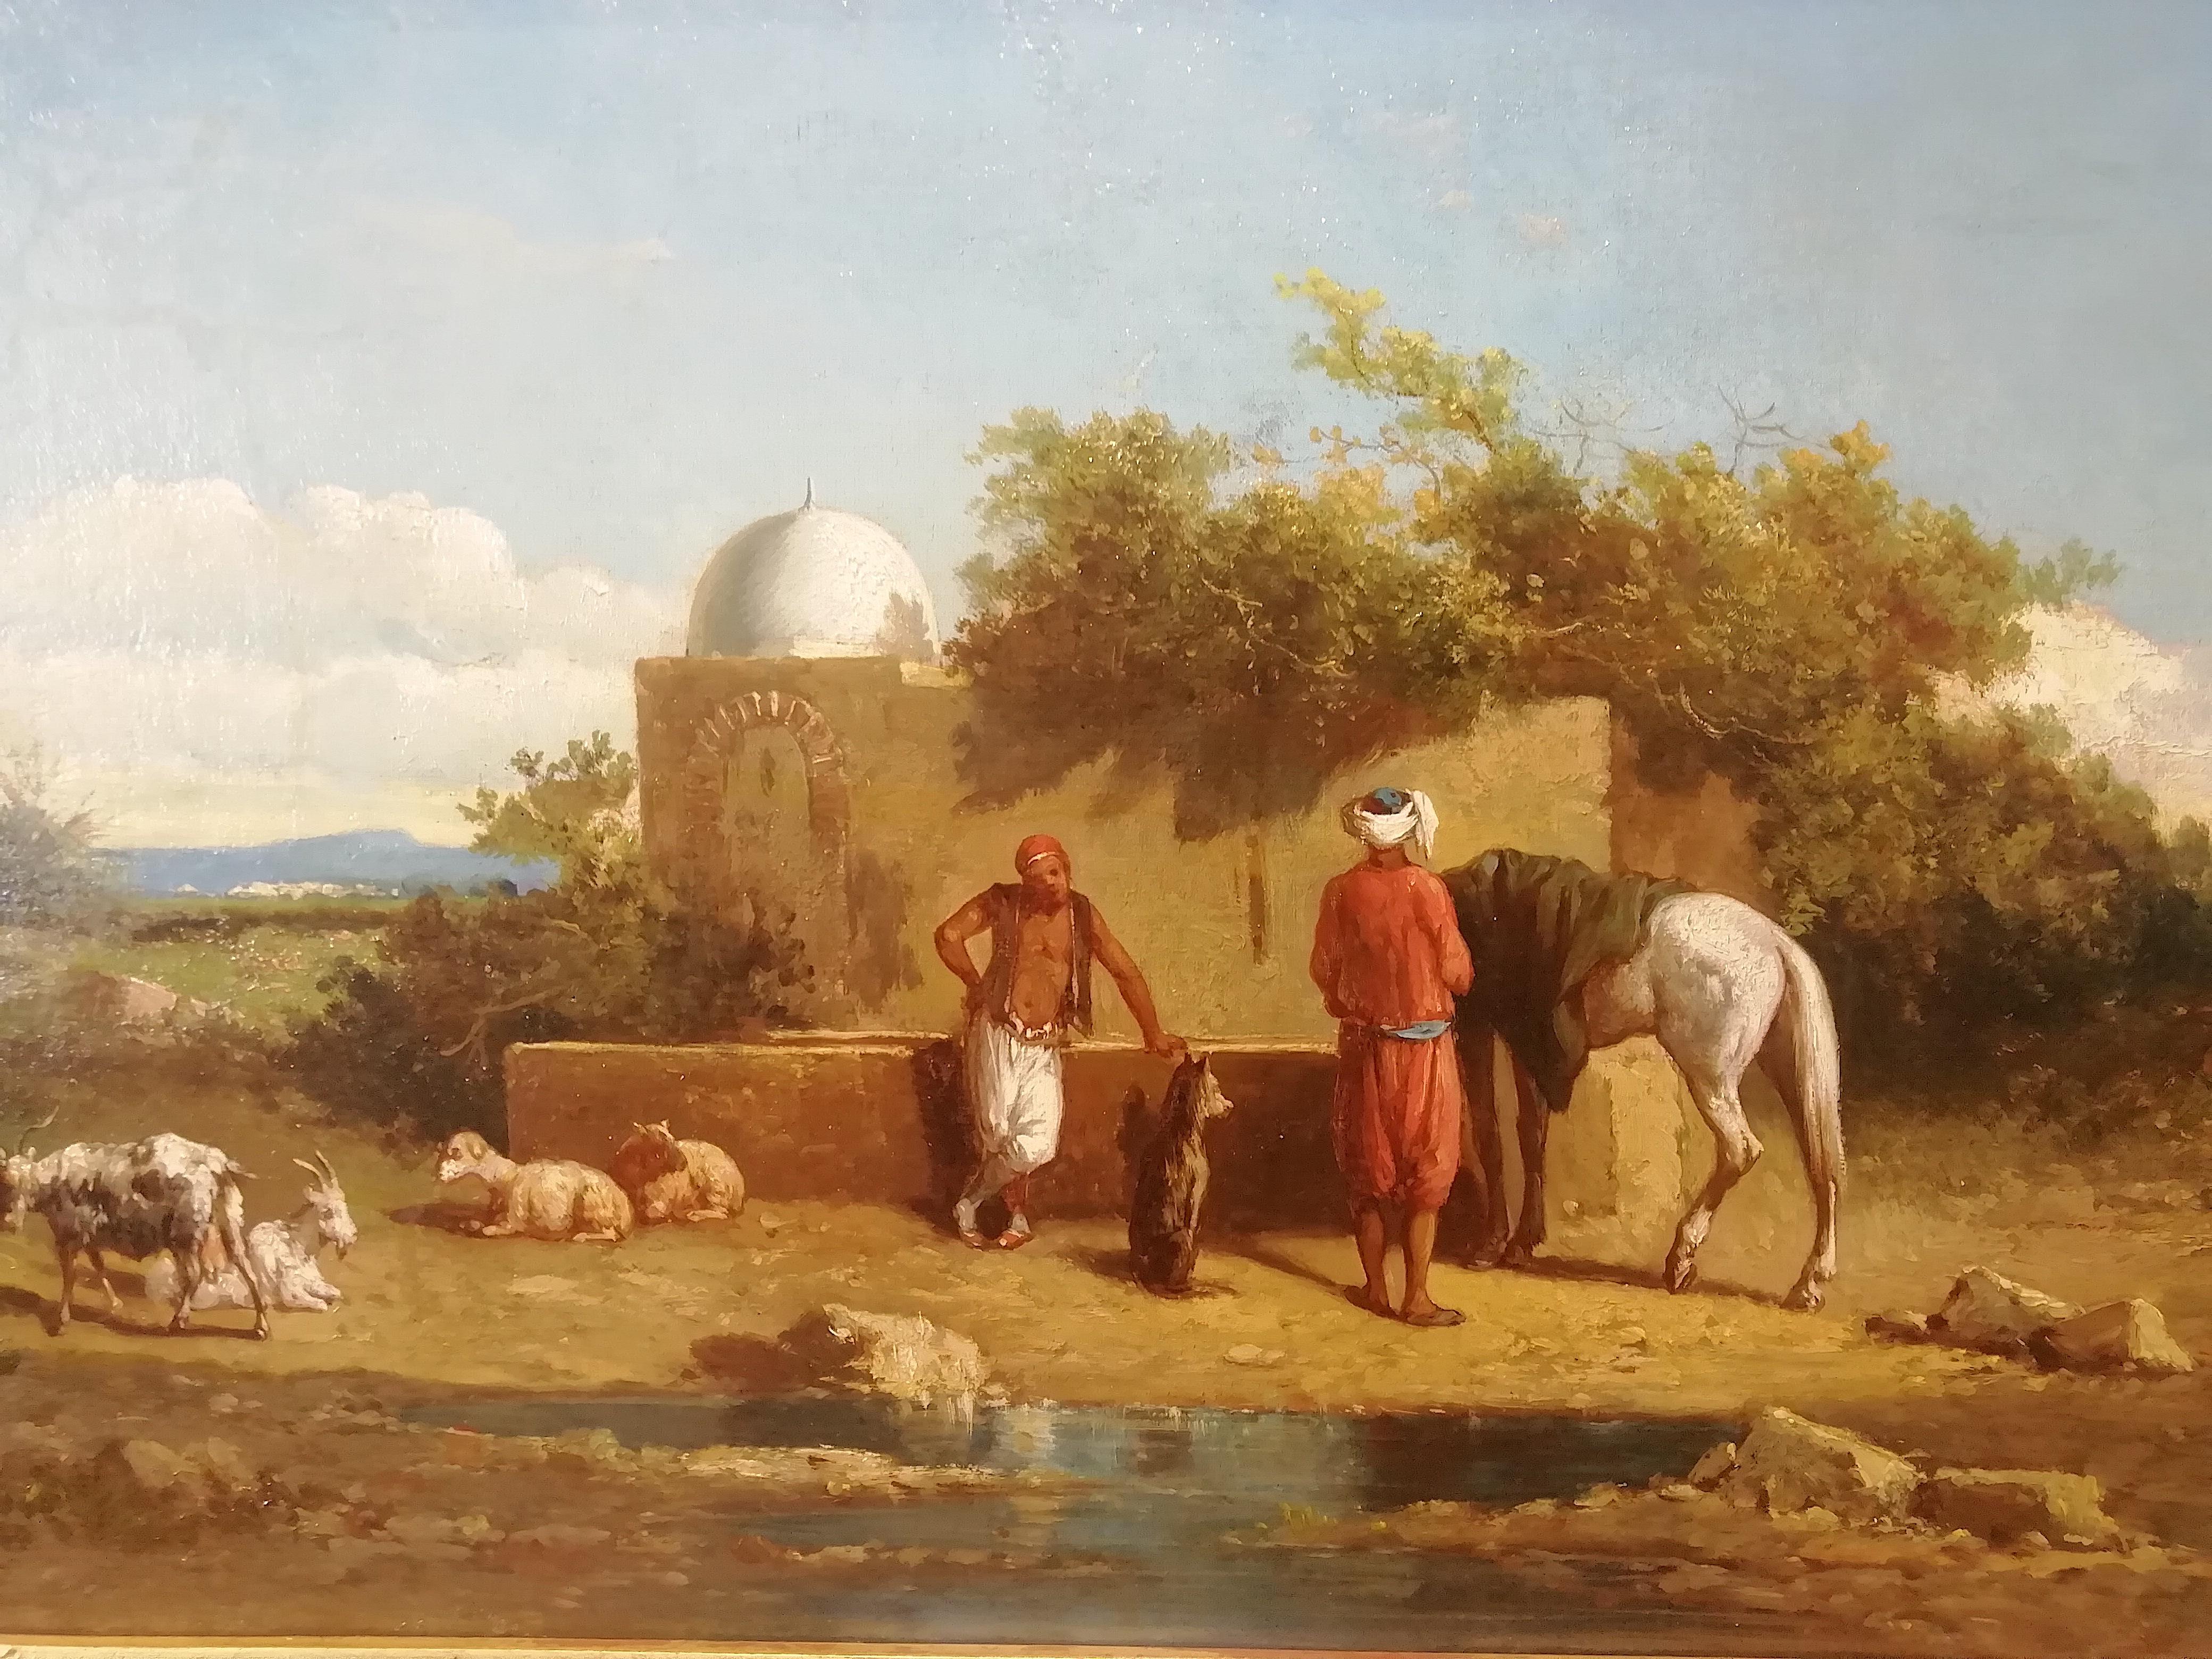 Oiled Orientalist Landscape Oasis, Theodore Gerard Oil 19 Century Orientalism Painting For Sale